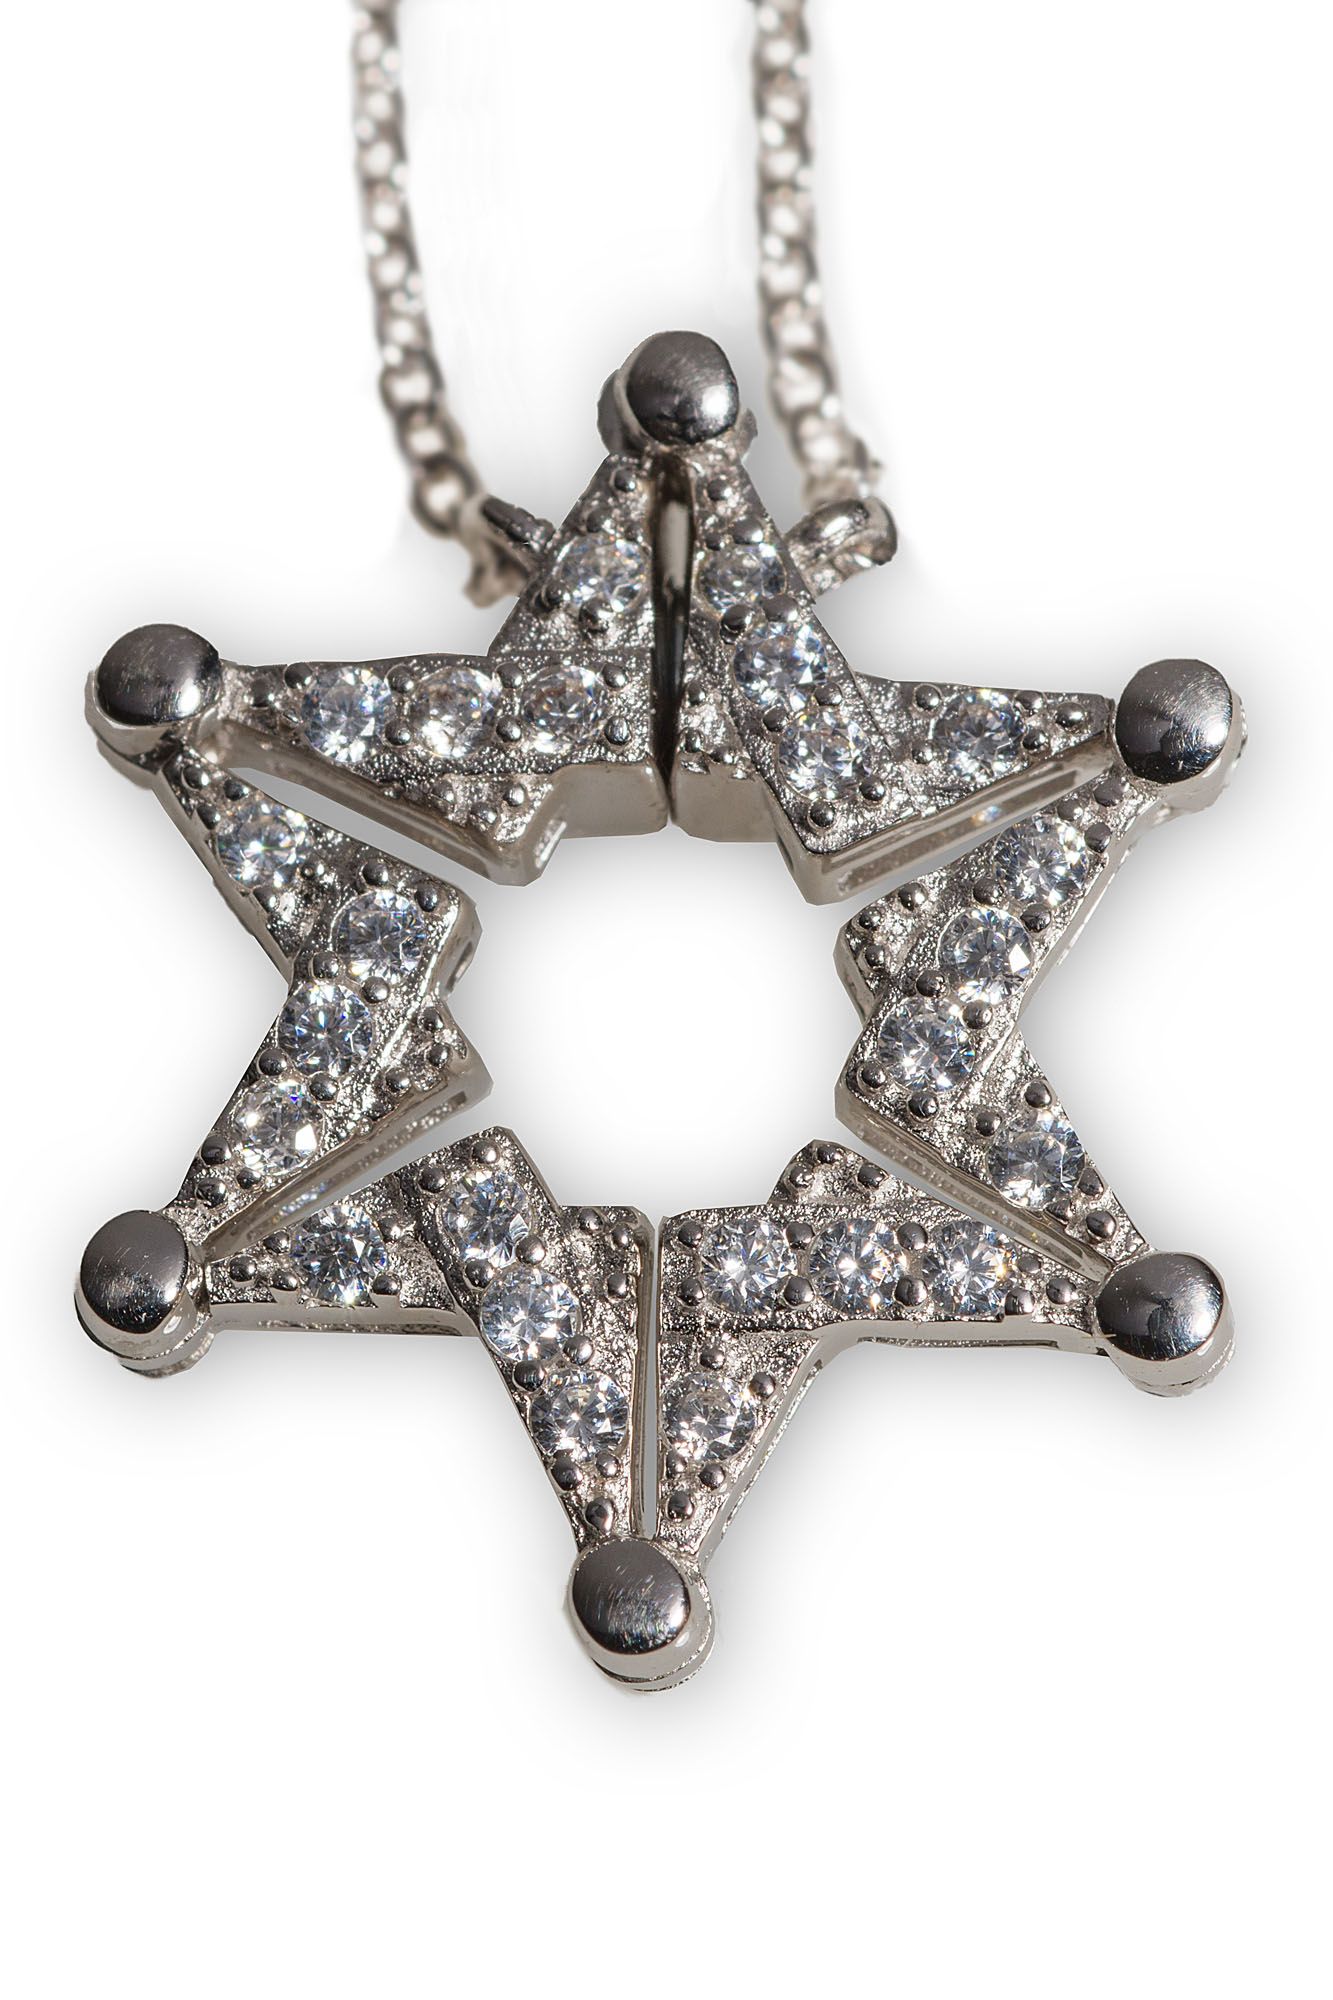 GOLD Magen David / 18K Gold Plated Jewish Star Star of David pendant / Star  of David chain / Handmade Jewish Star of David